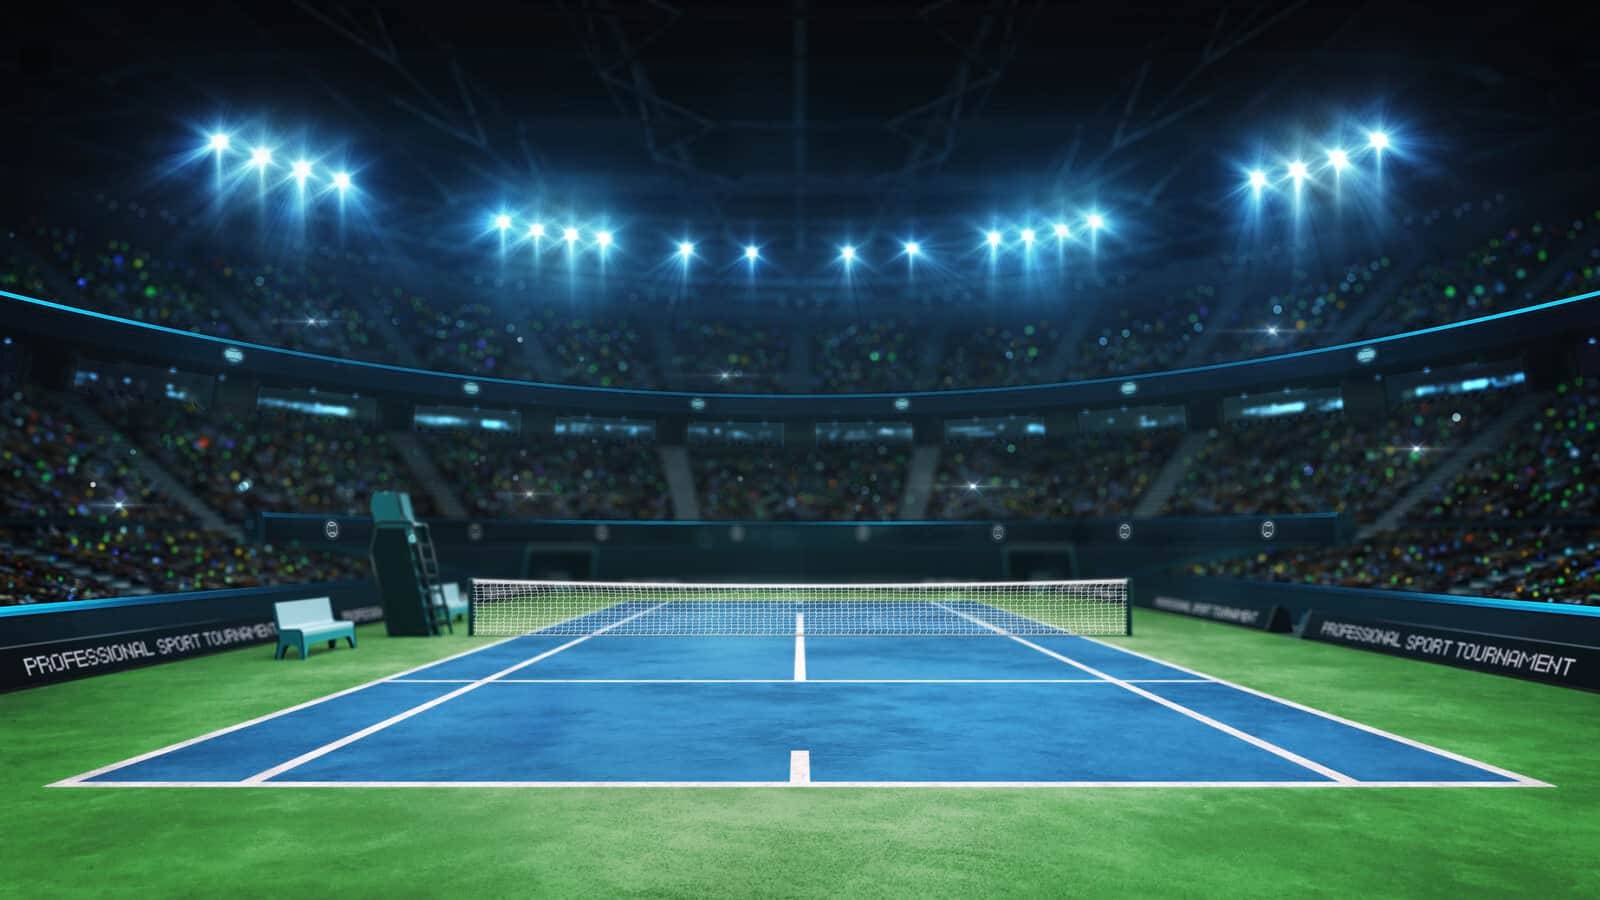 Tennis stadium court at night high school research